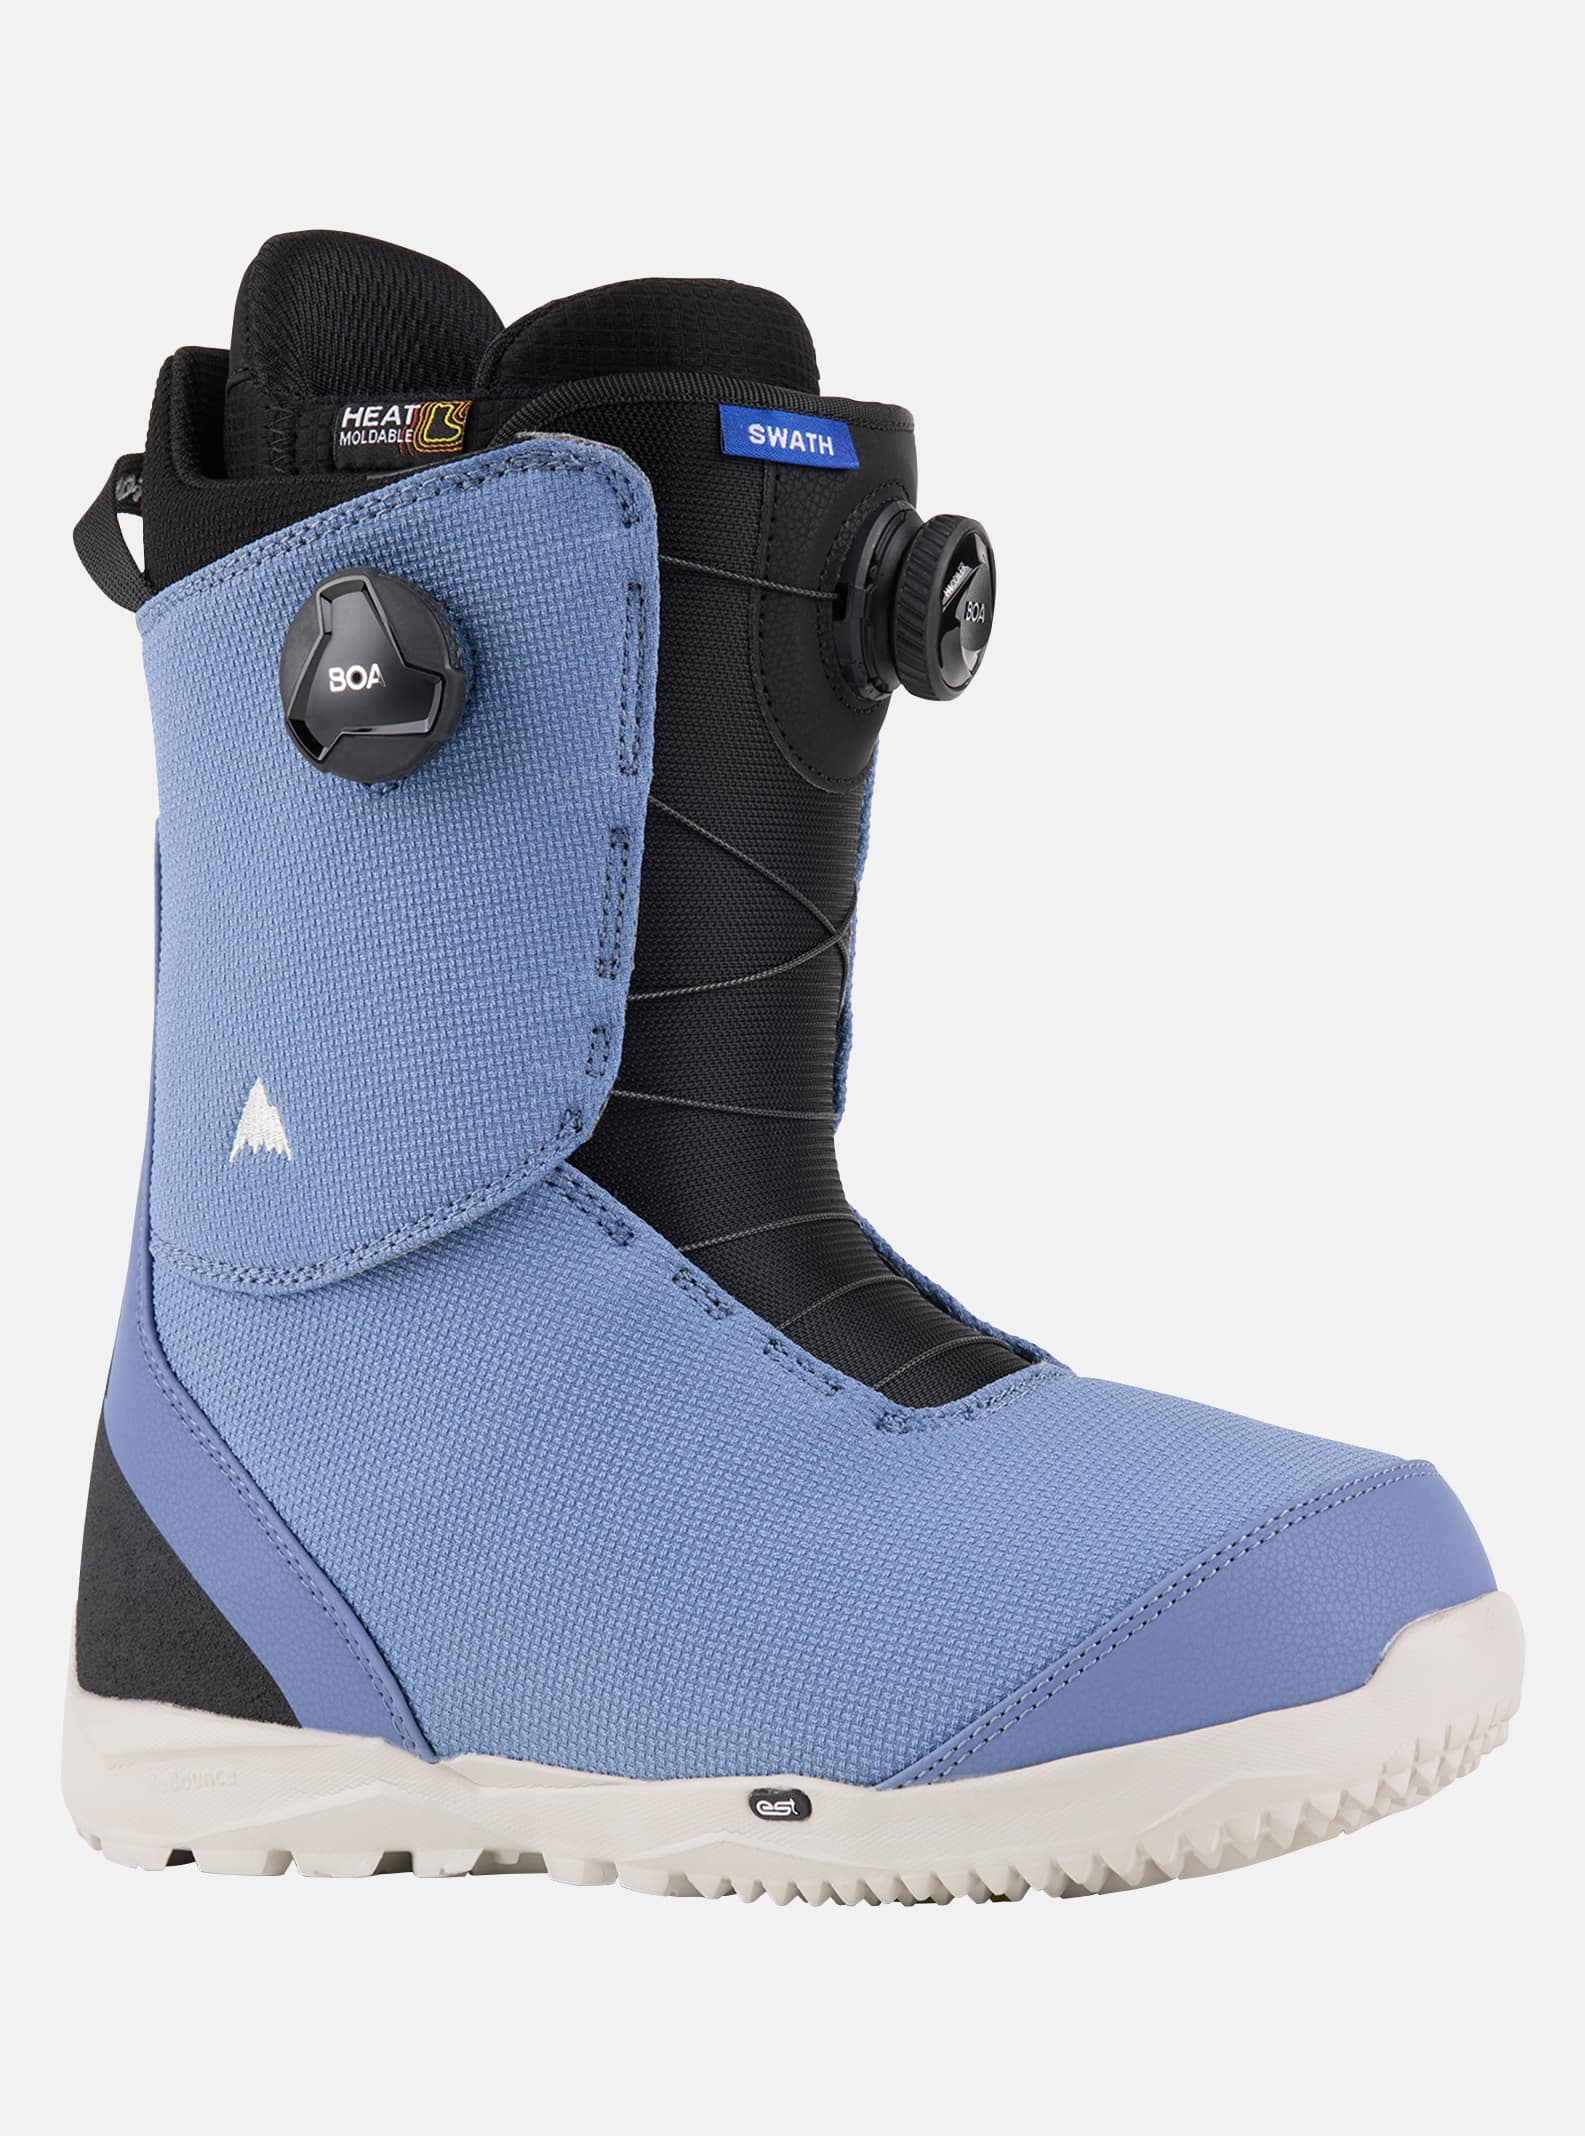 Men's Burton Swath BOA® Snowboard Boots